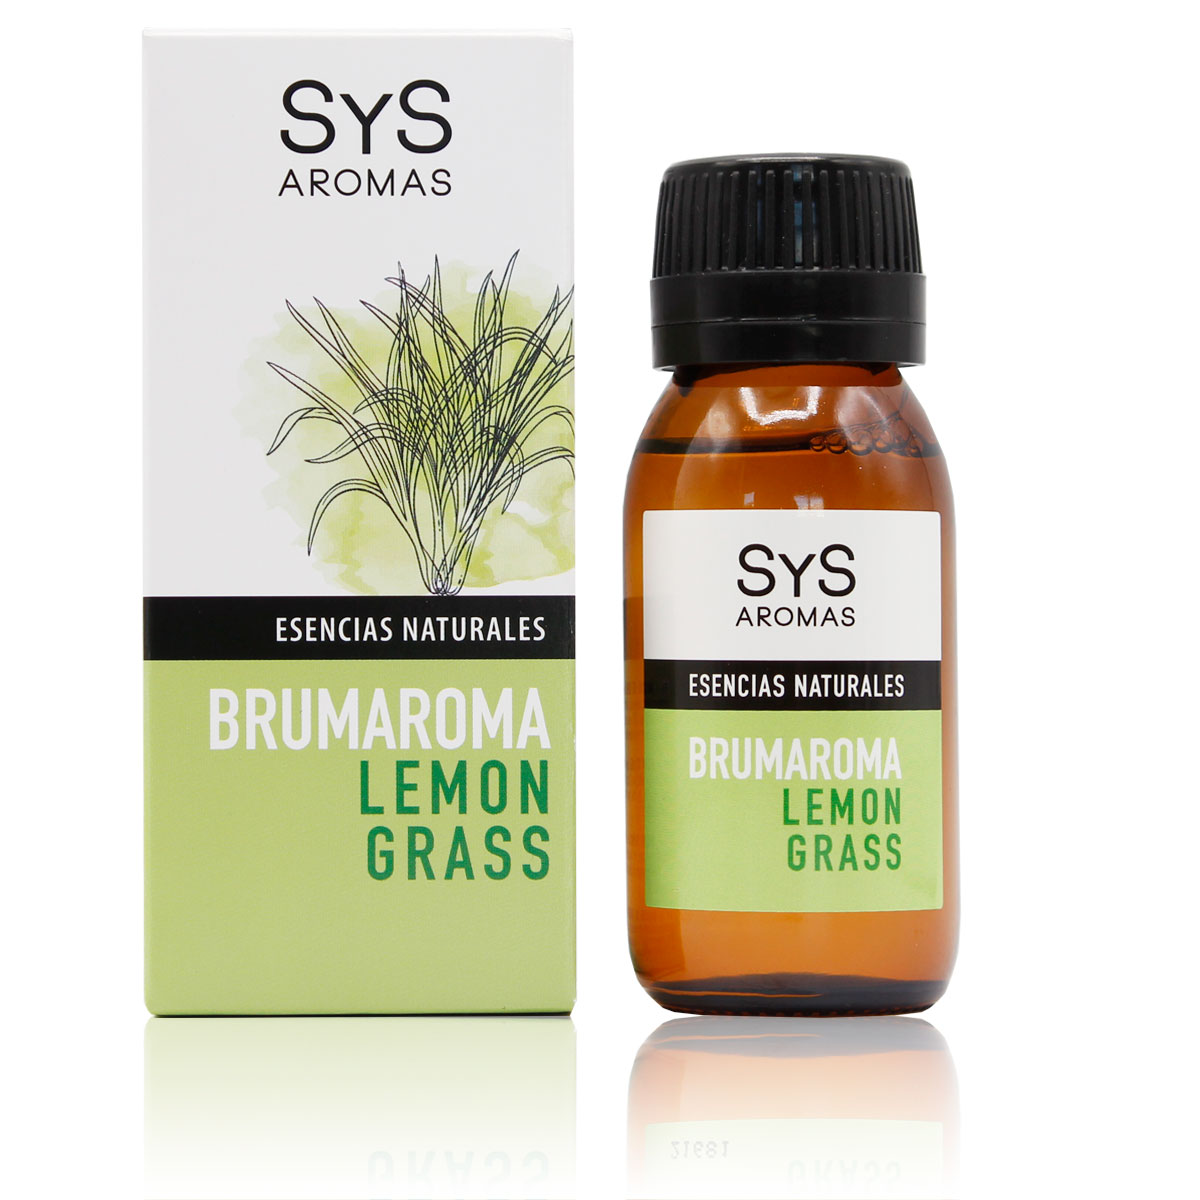 Brumaroma Lemon Grass